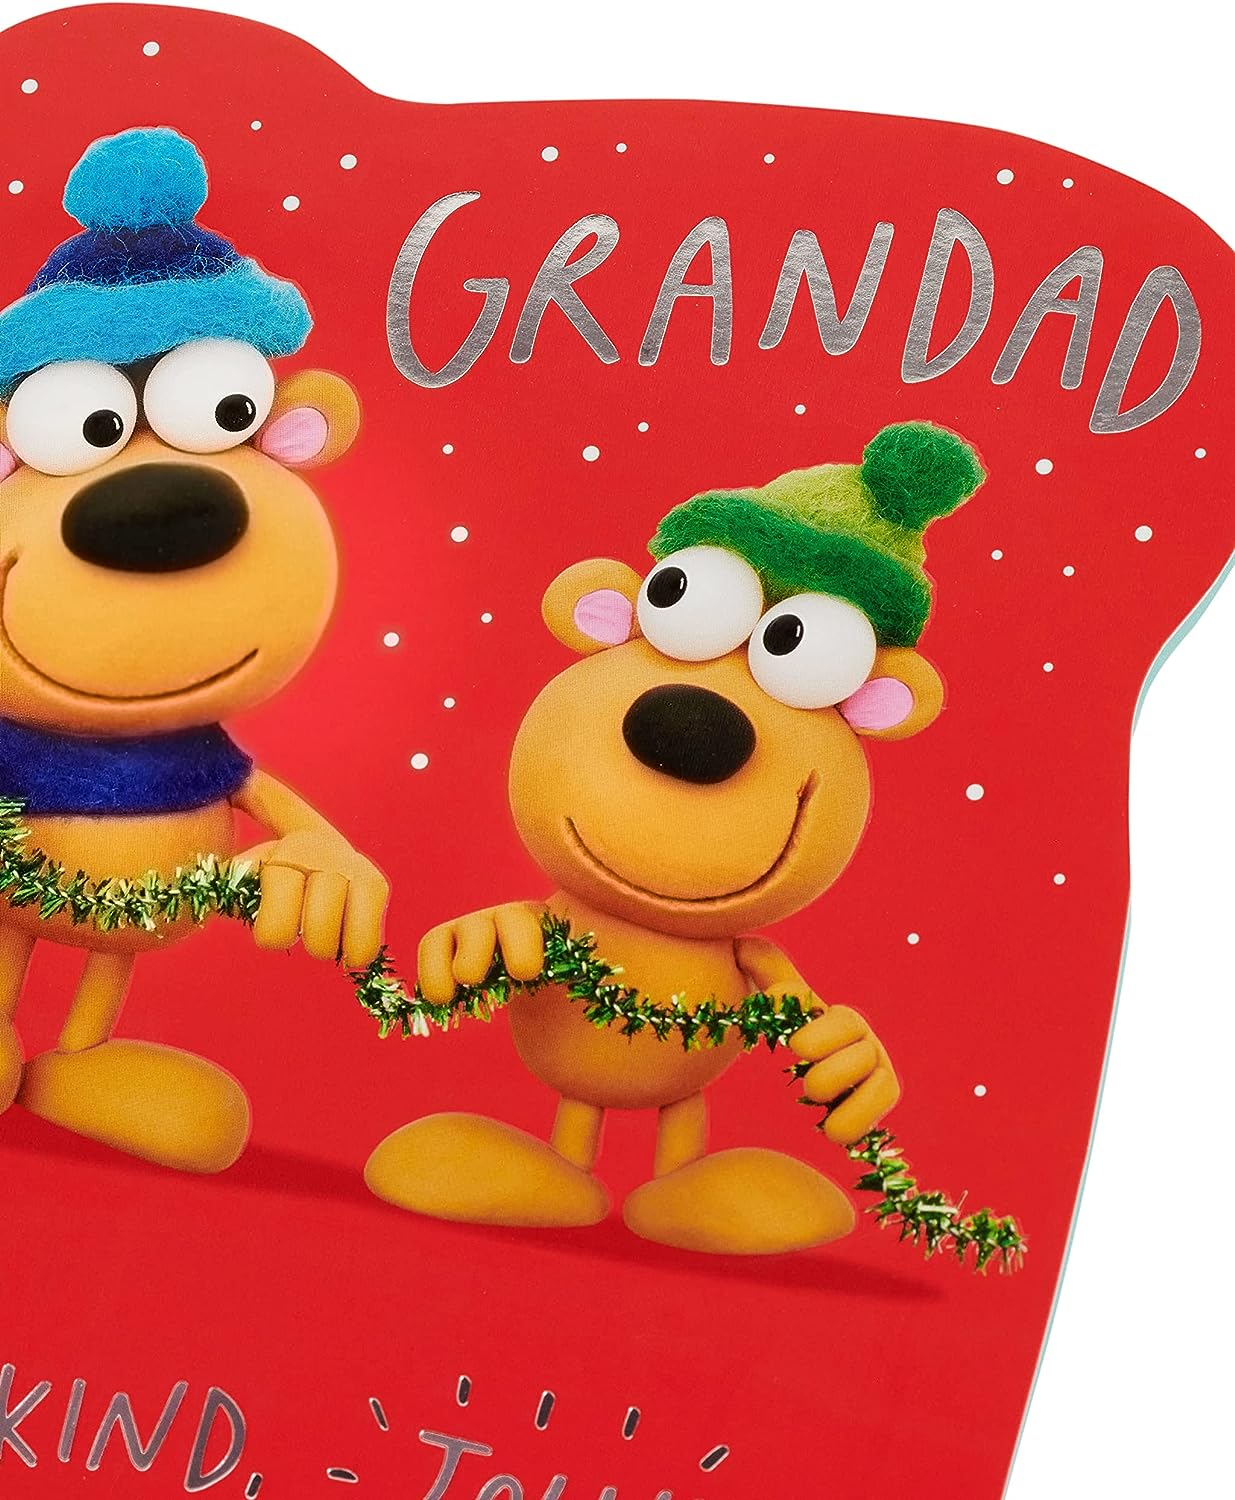 Grandad Christmas Card Funny Design 